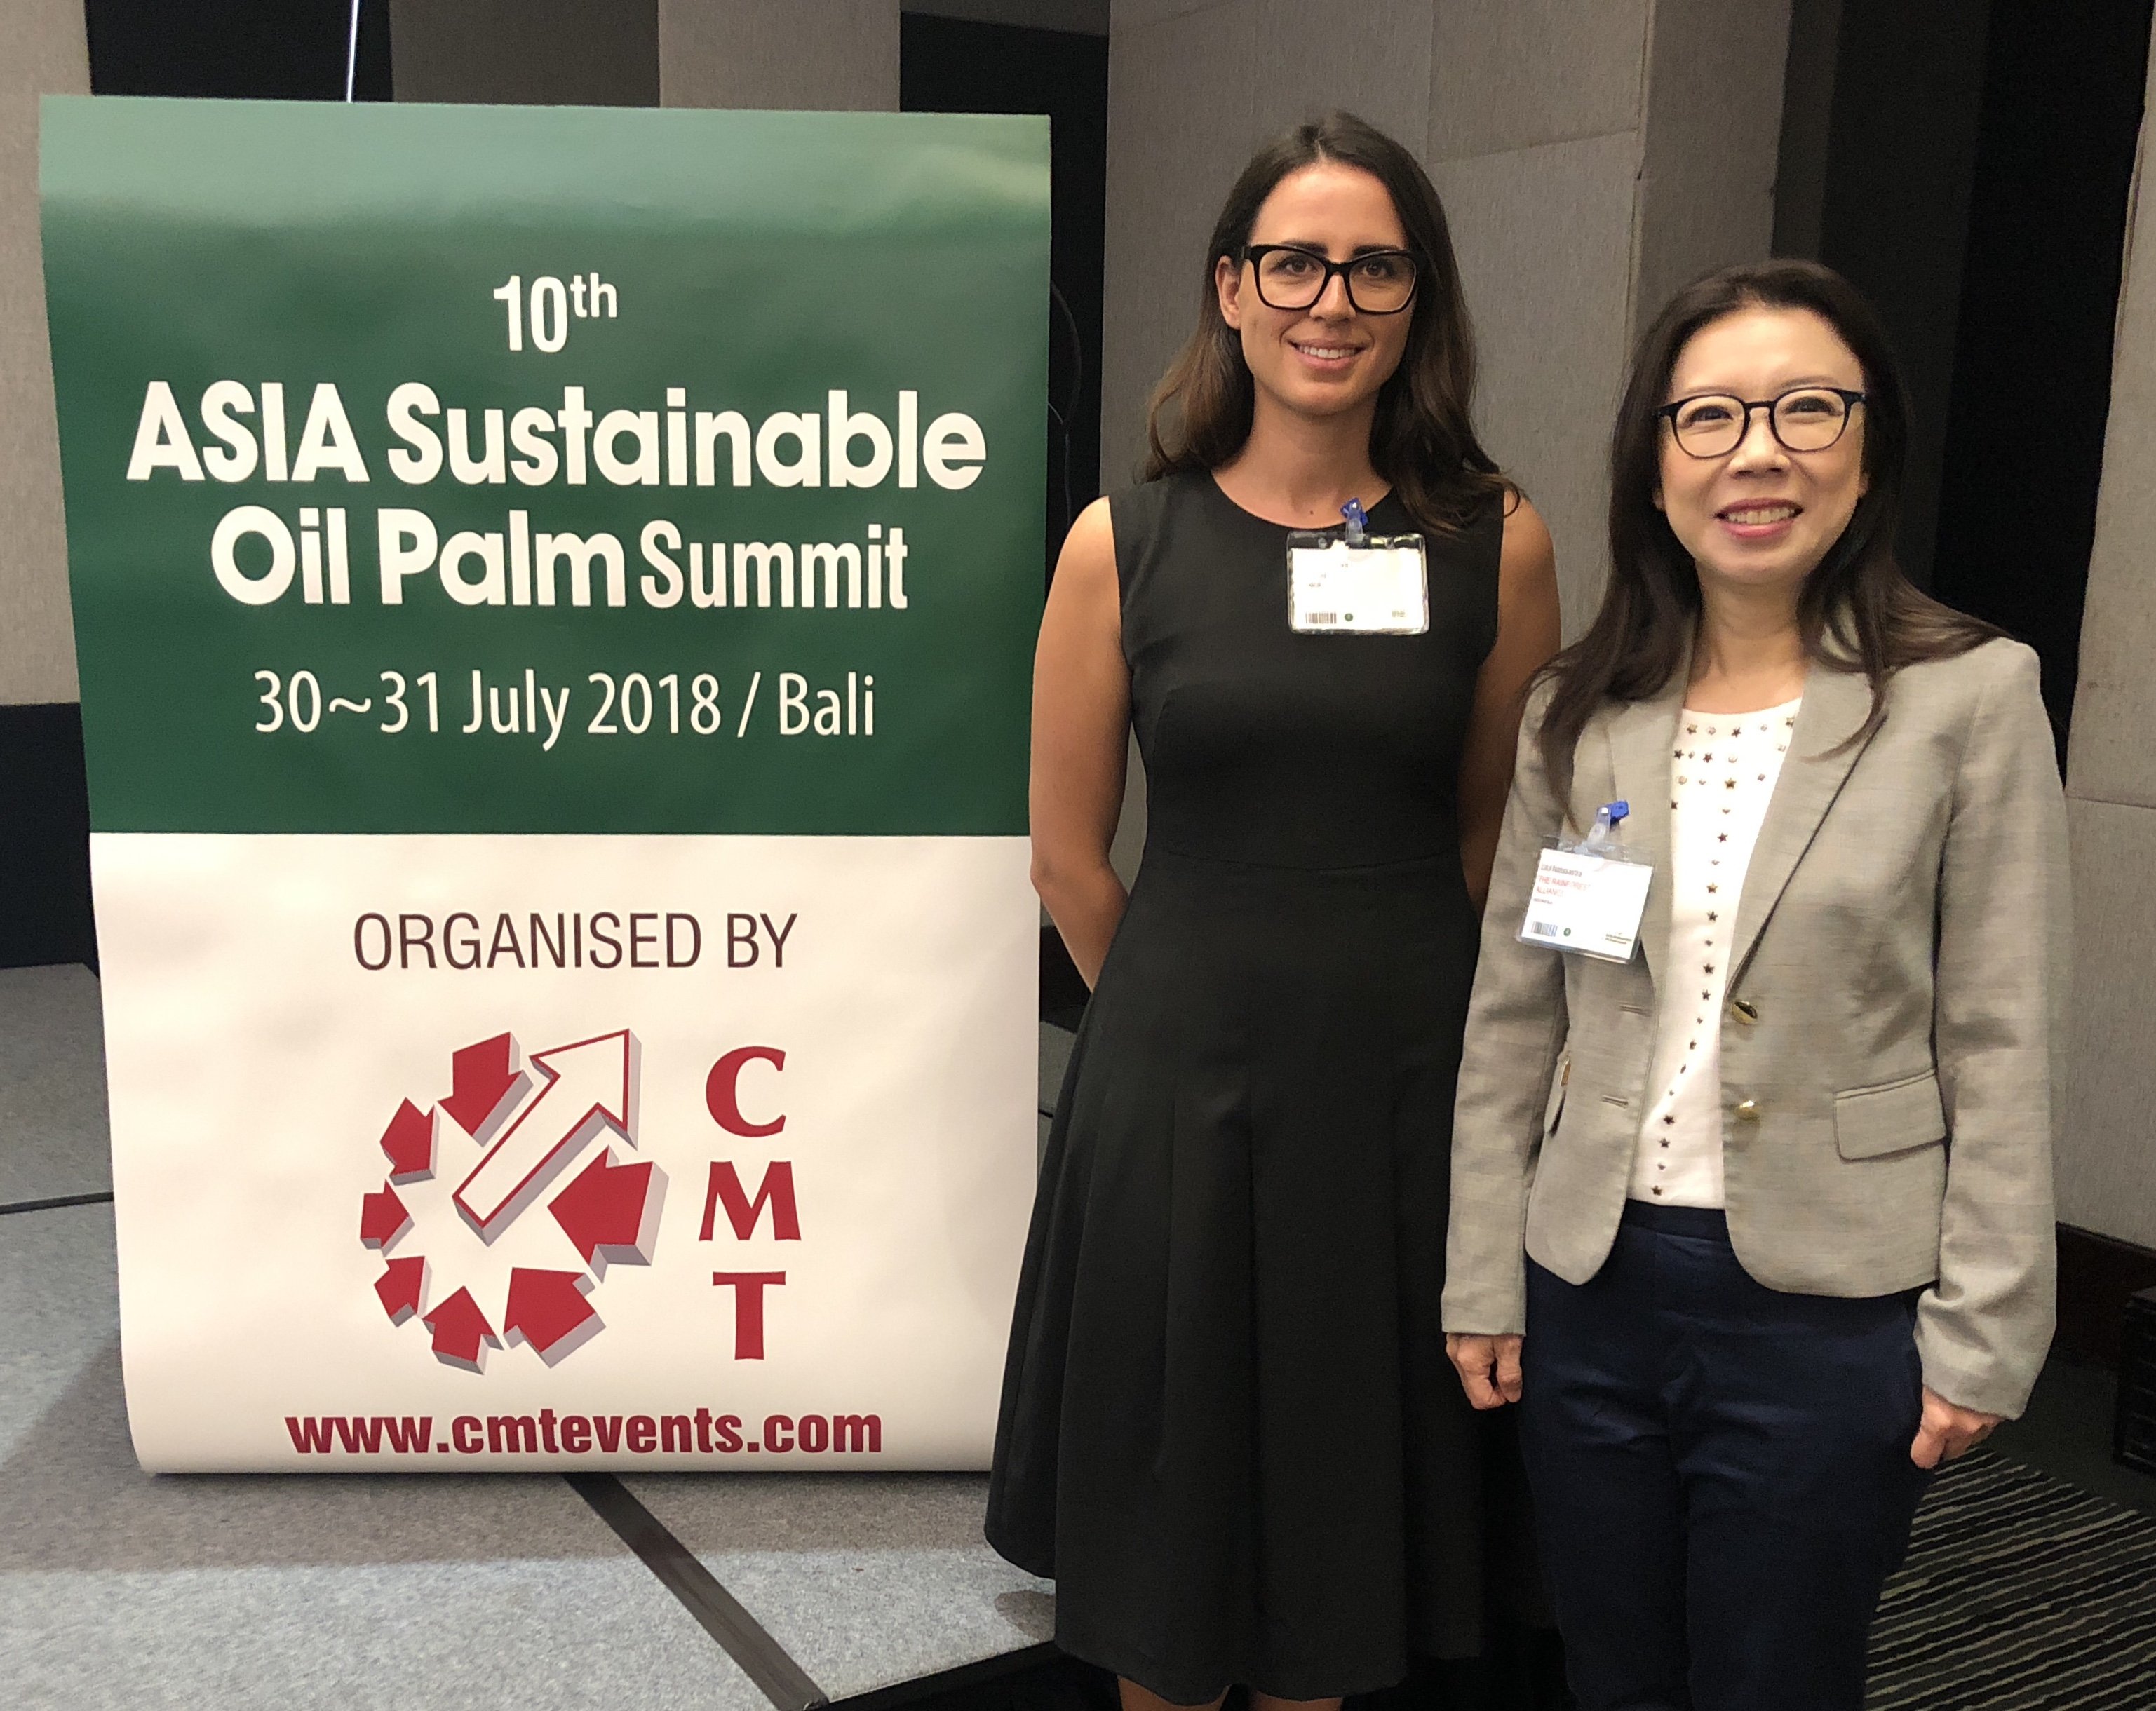 Asia Sustainable Oil Palm Summit